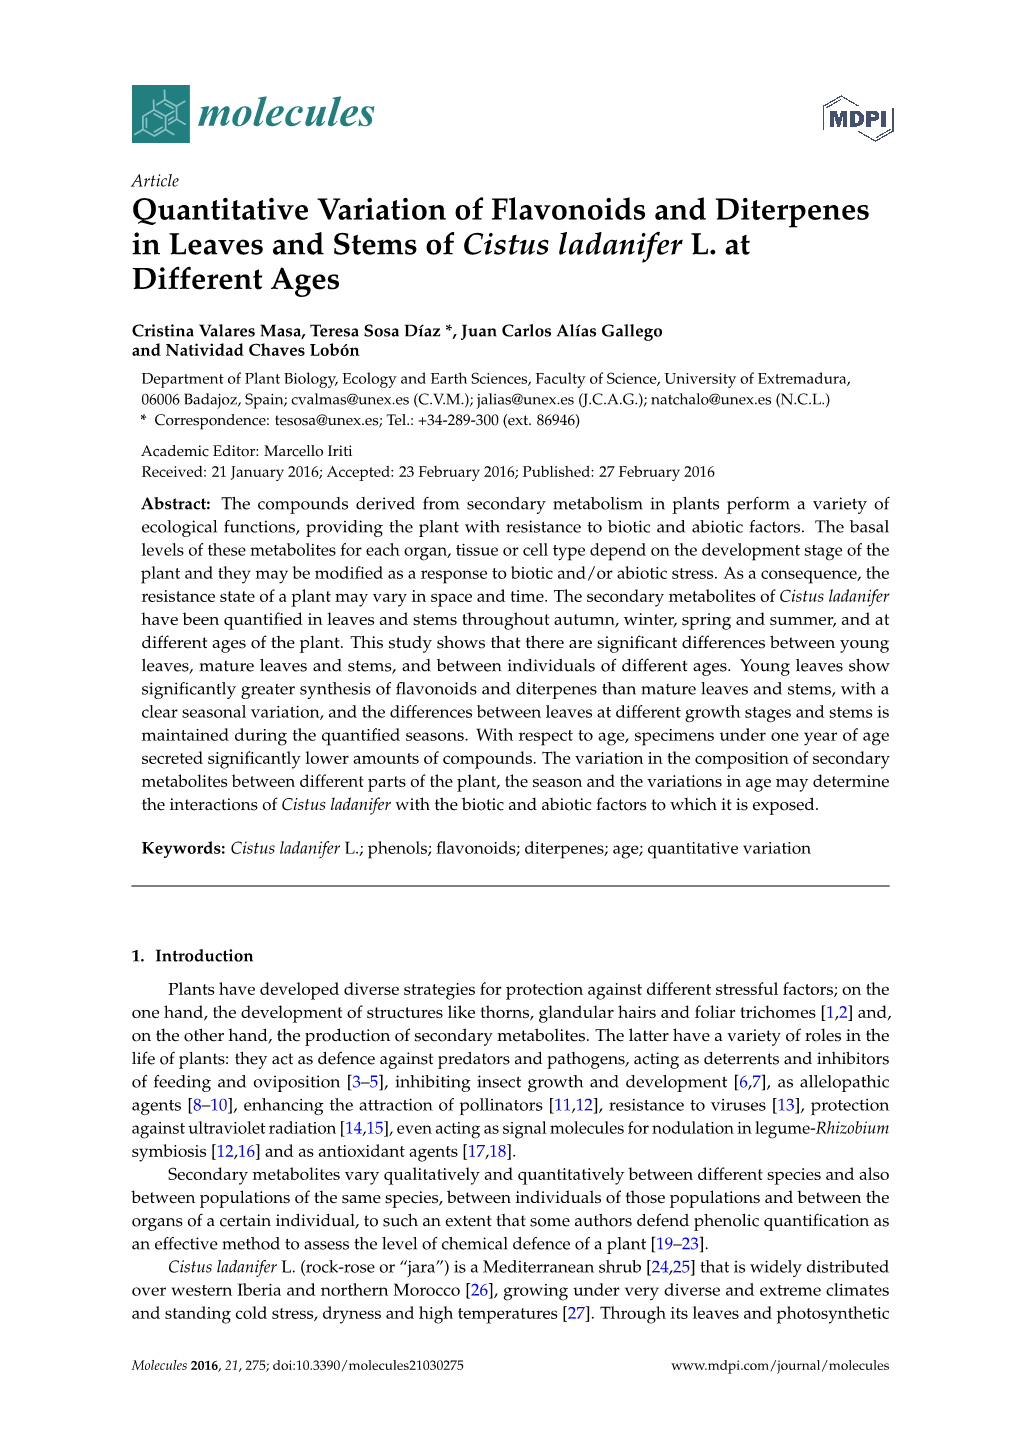 Quantitative Variation of Flavonoids and Diterpenes in Leaves and Stems of Cistus Ladanifer L